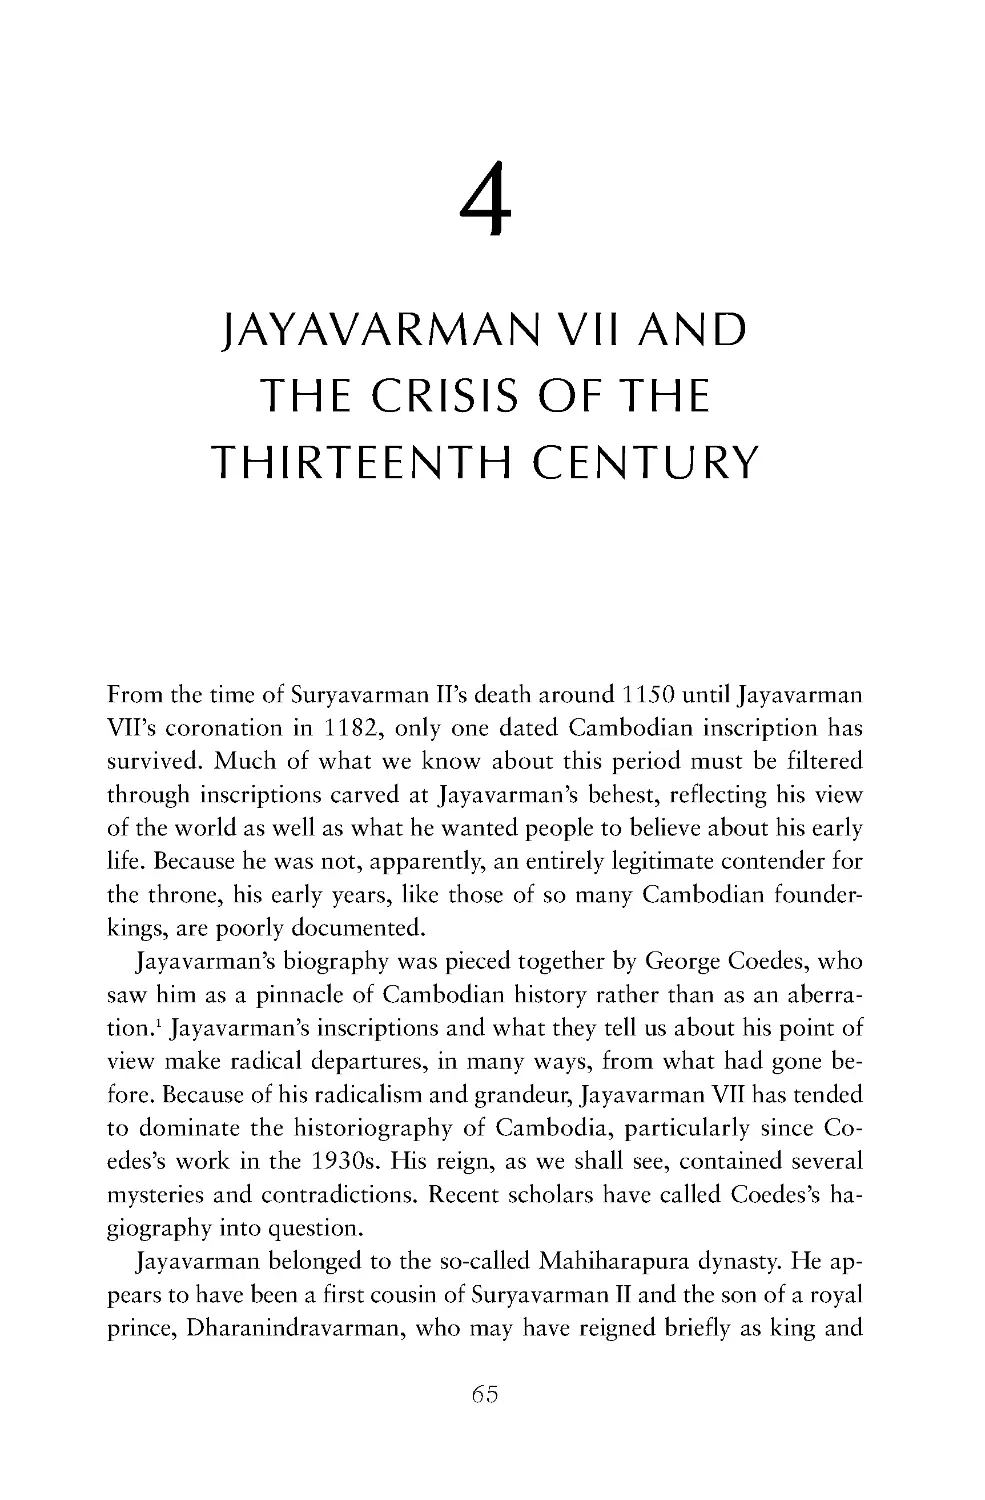 4. Jayavarman VII and the Crisis of the Thirteenth Century